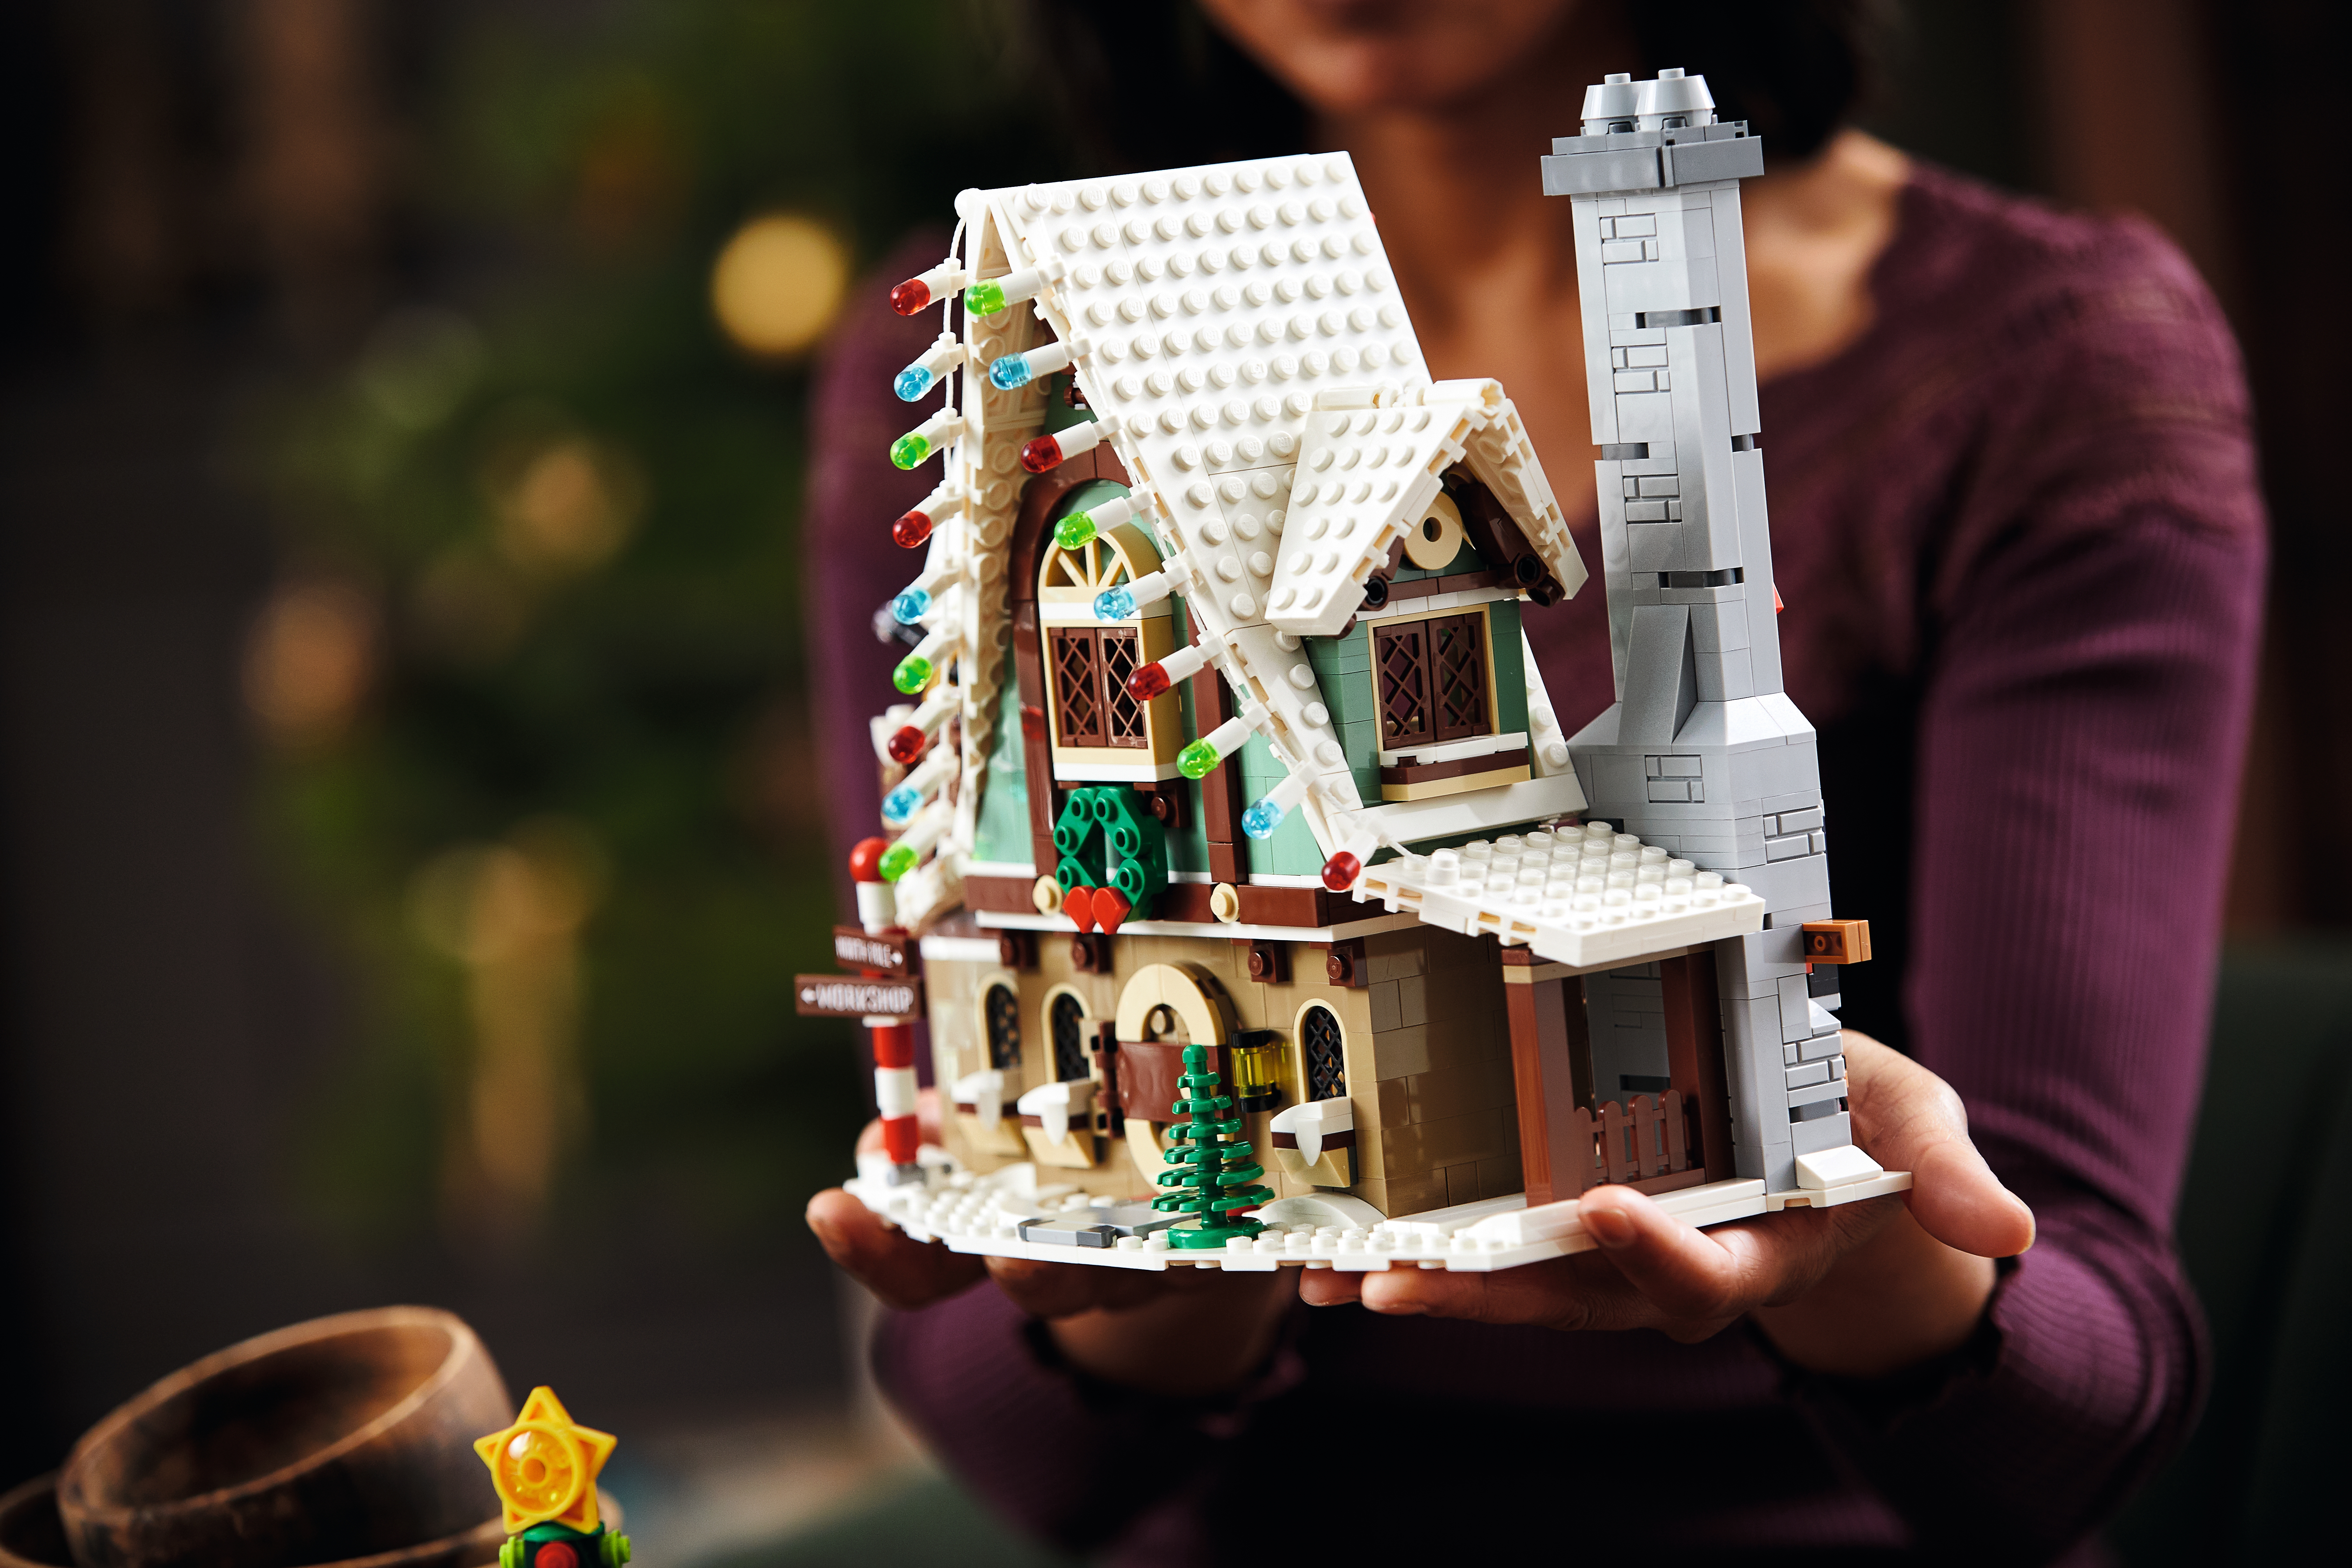 LEGO Elf Club House 10275 1,197 Pieces Building Kit for sale online